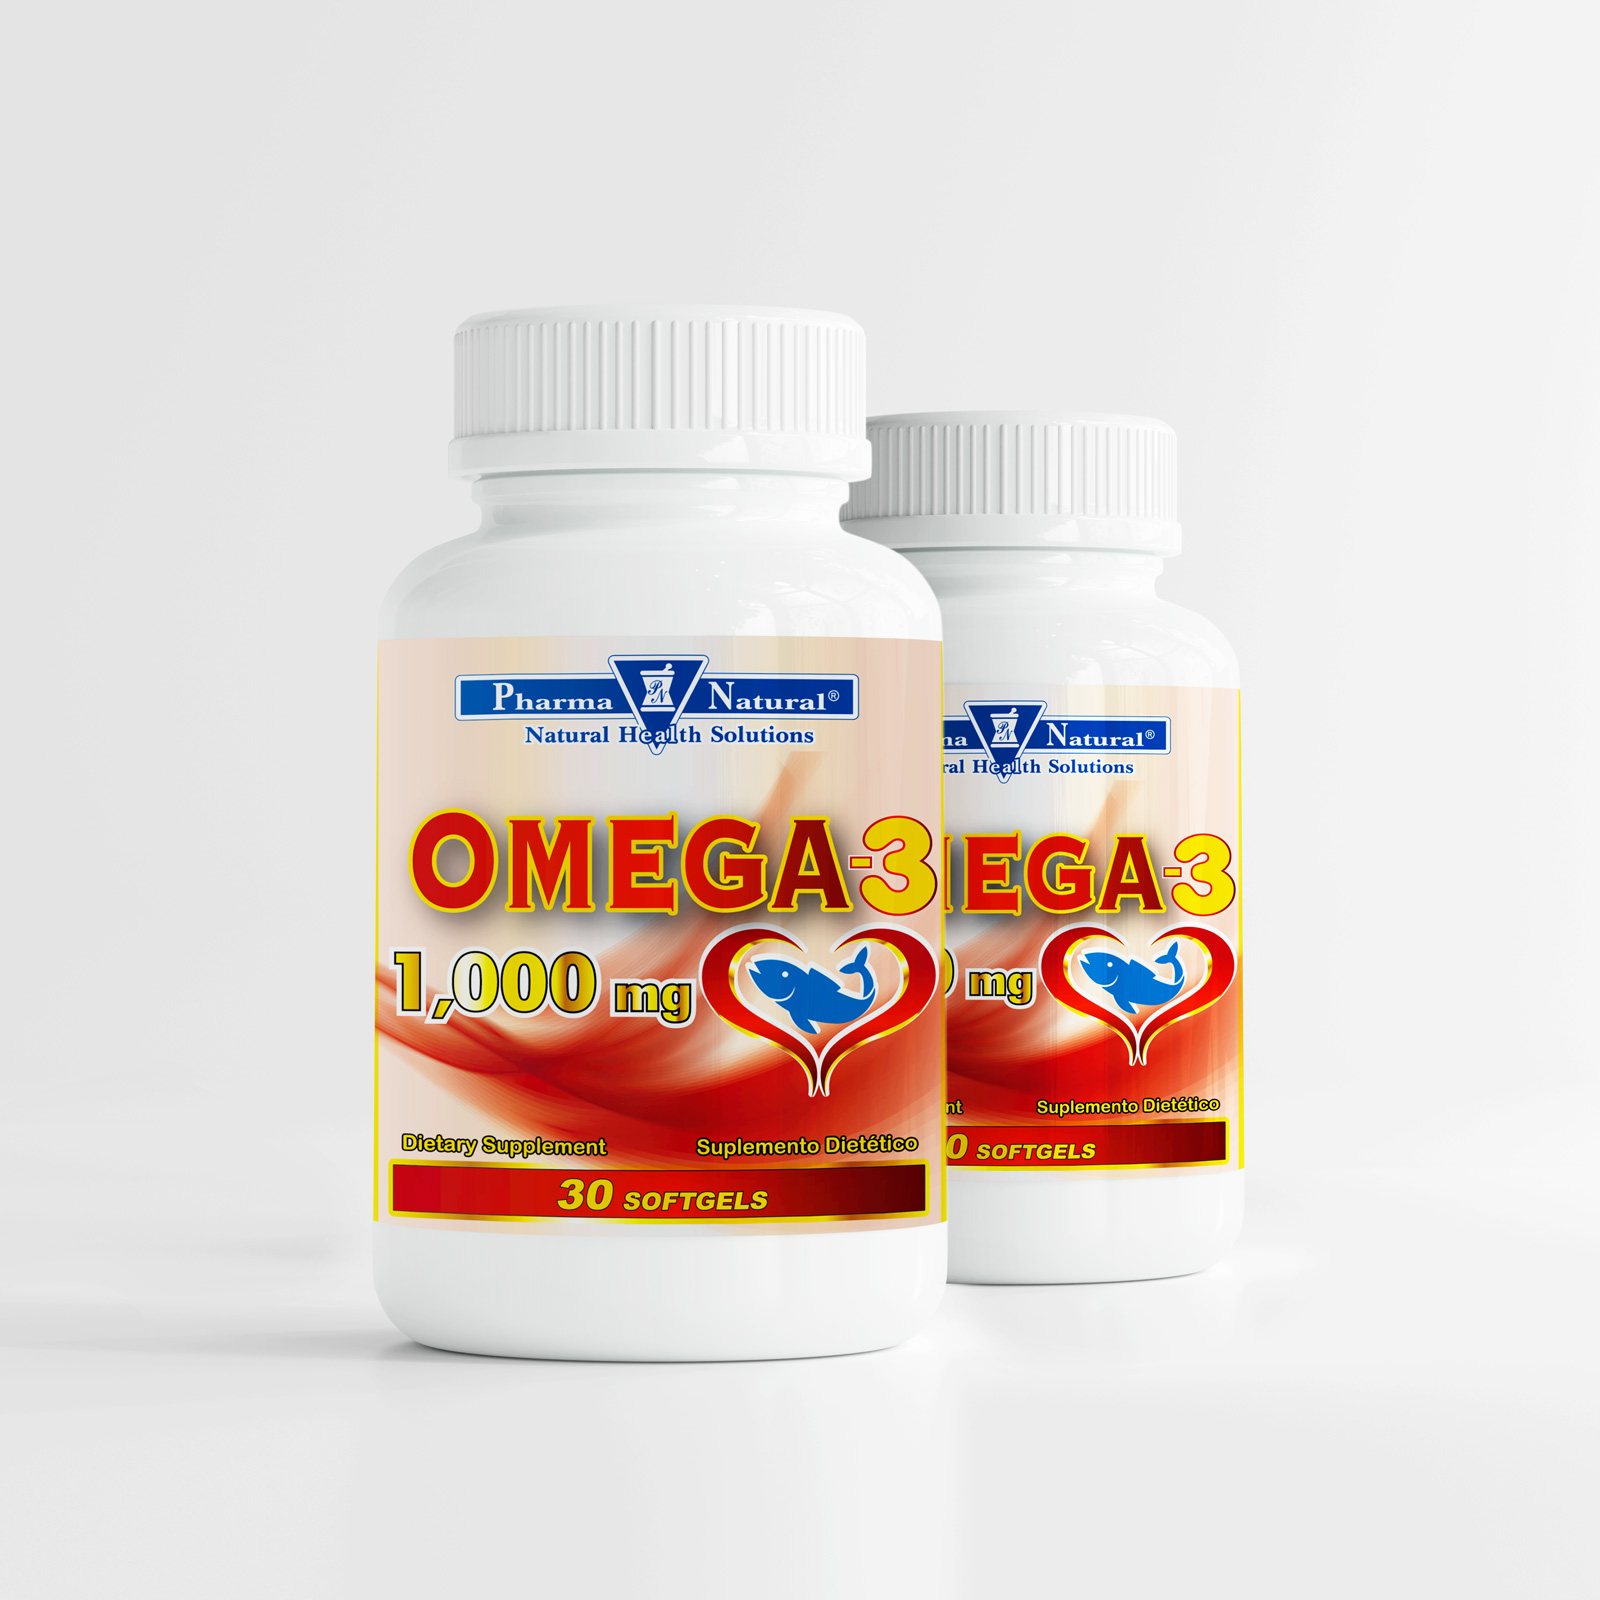 Dicht concert daarna Omega-3 1,000 mg, 2 x (30 Softgels) - Pharma Natural